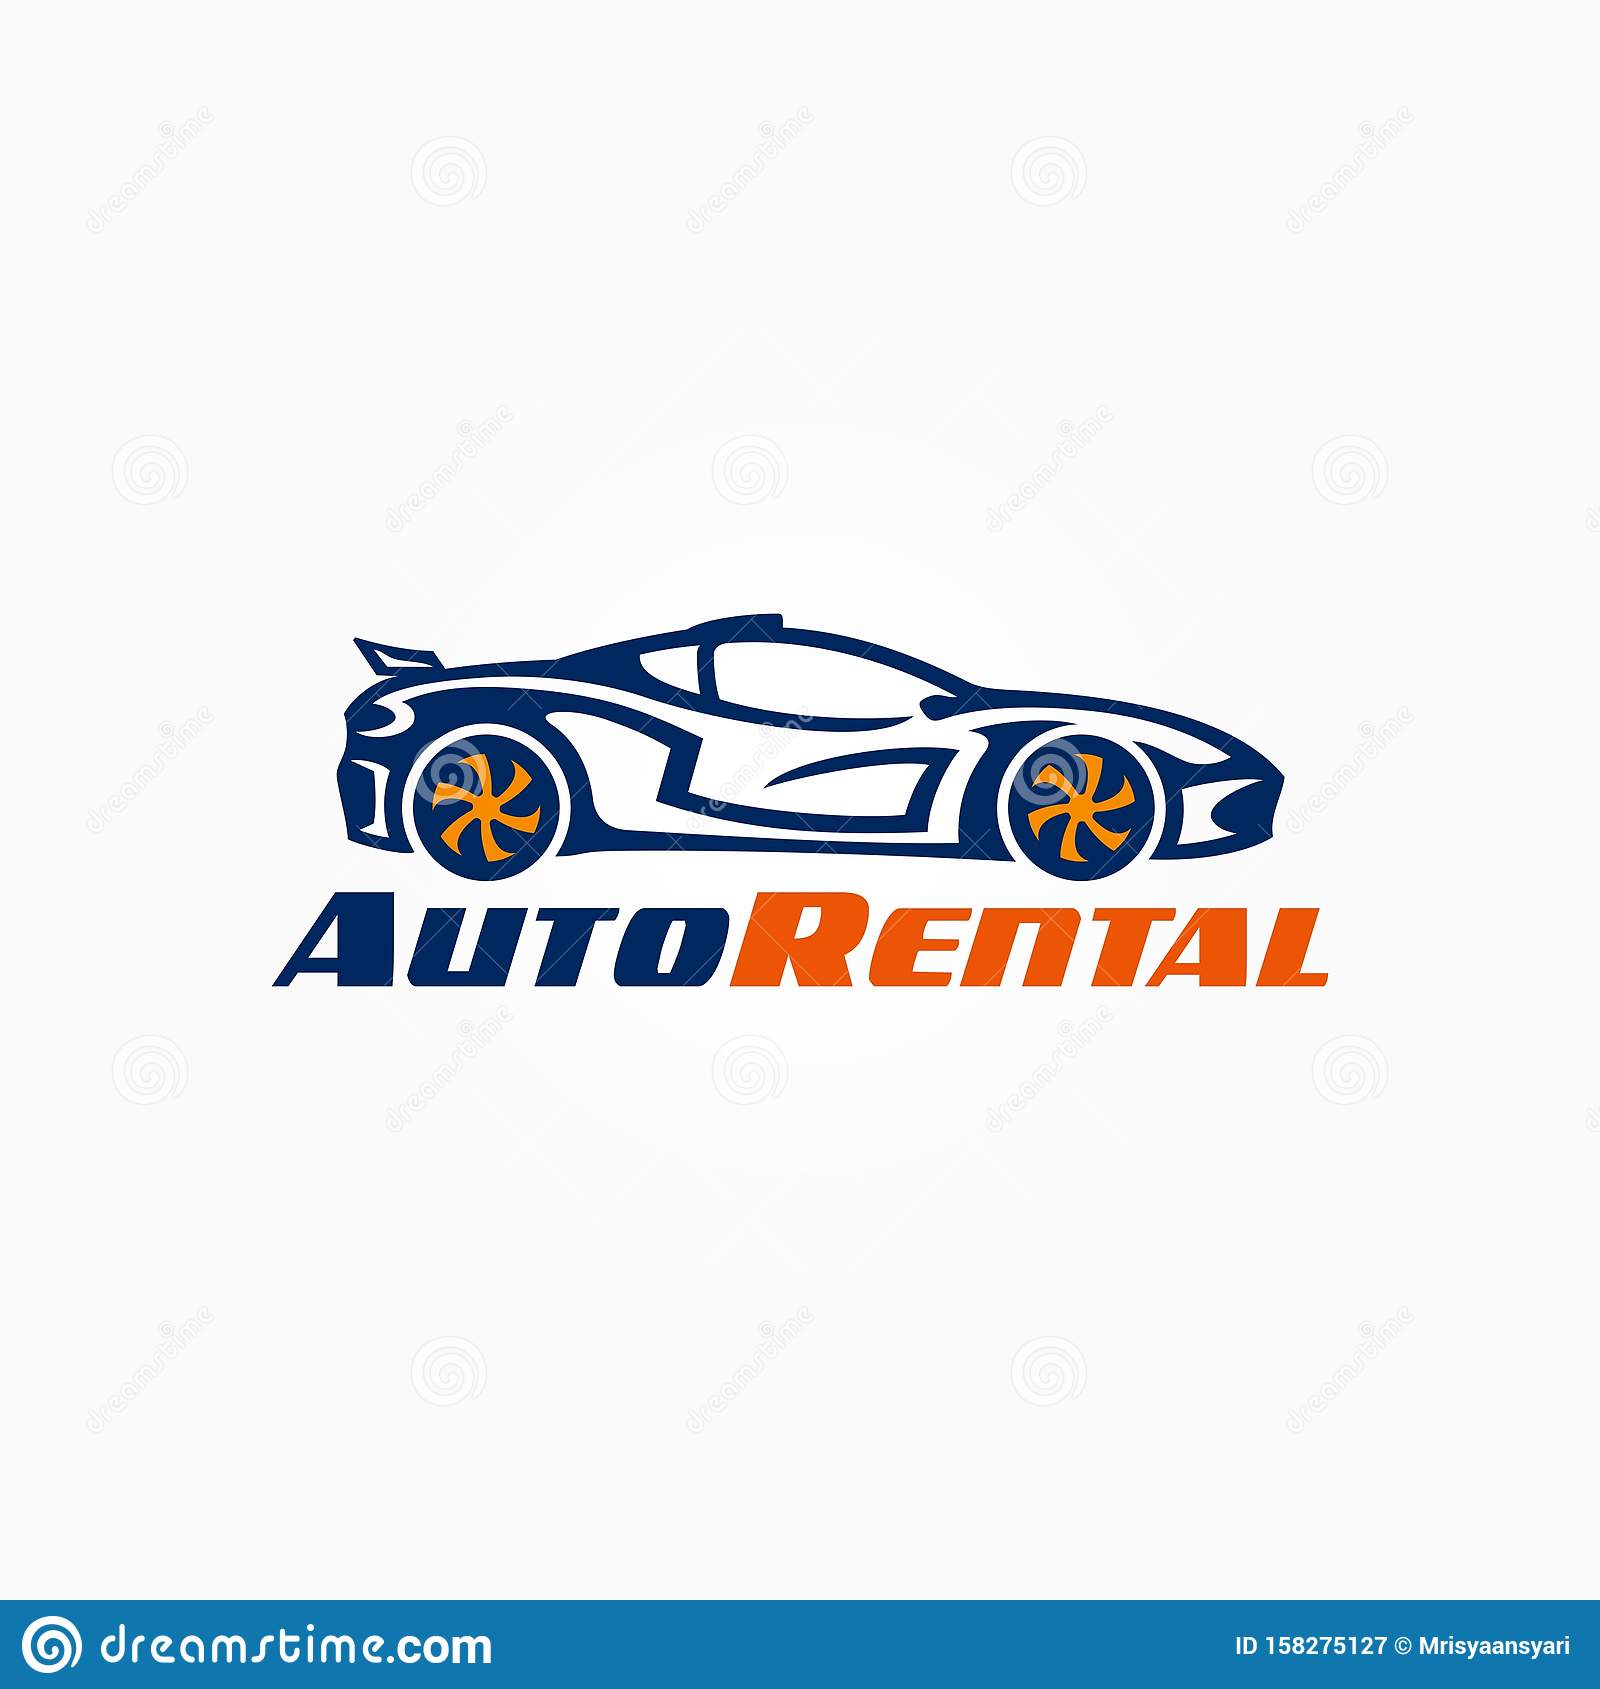 Future Cars car rental company